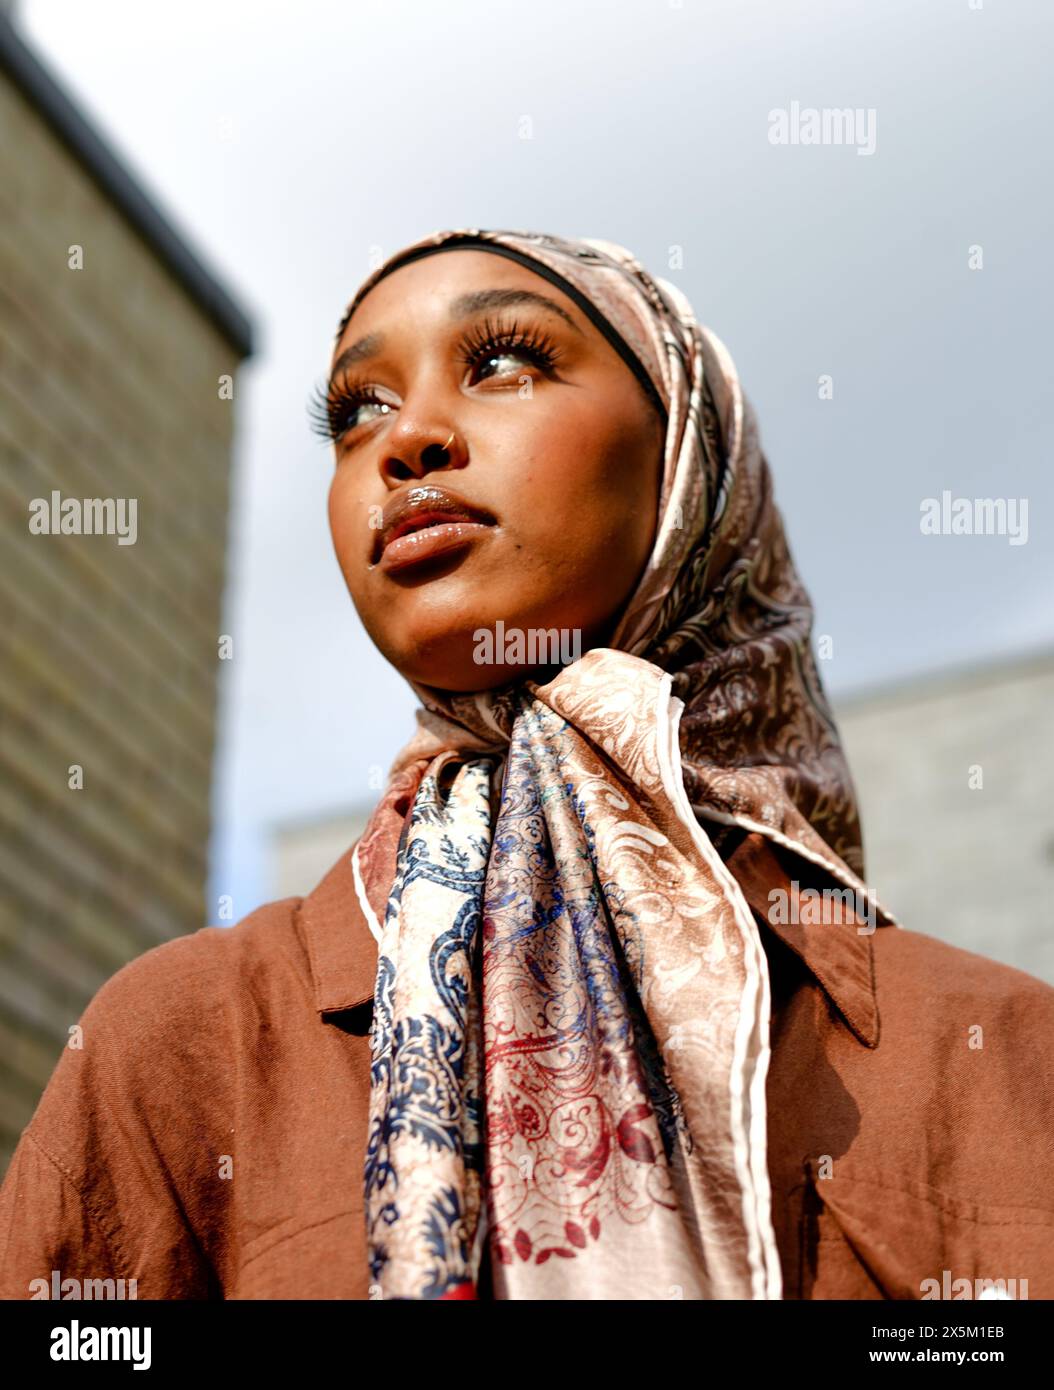 UK, London, Portrait of young woman wearing hijab outdoors Stock Photo